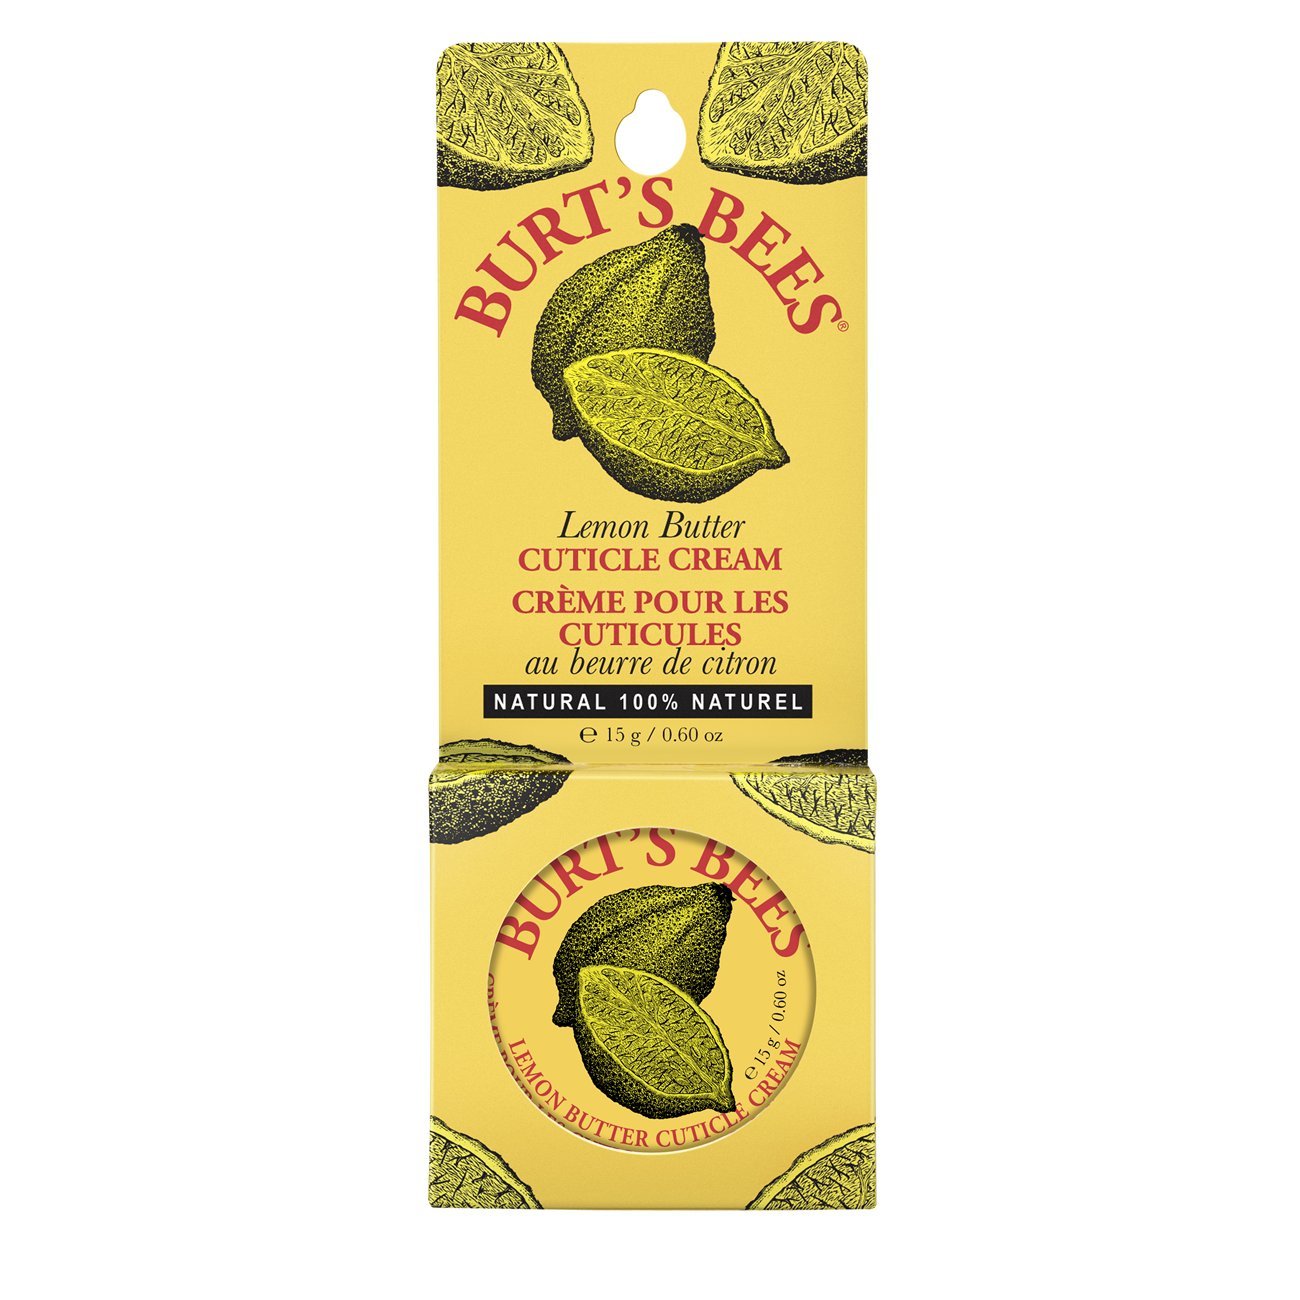 Burt's Bees 100% Natural Lemon Butter Cuticle Cream​